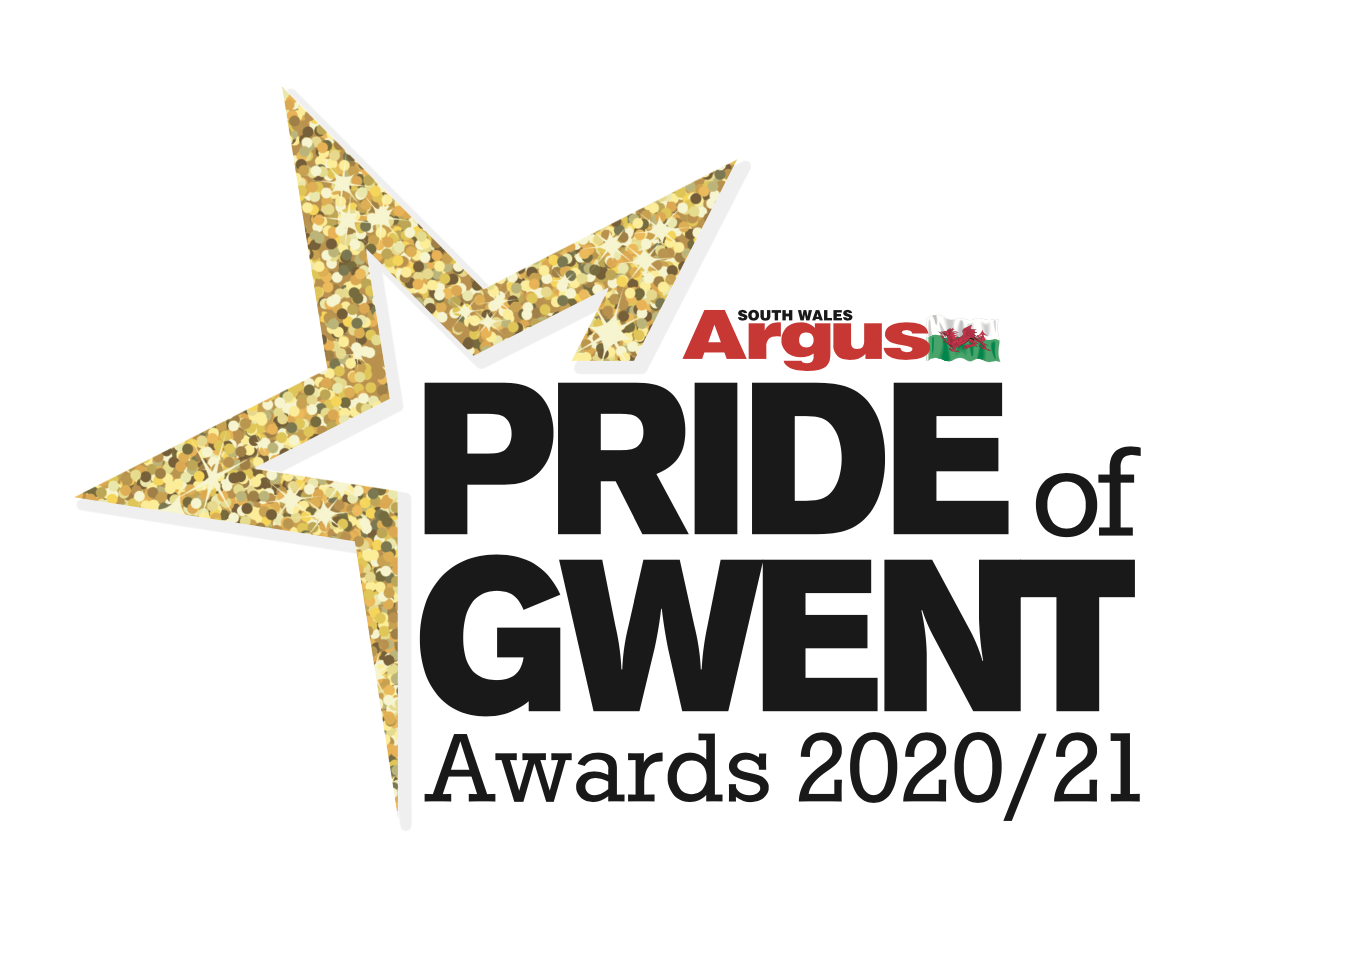 Pride of Gwent Awards 2020/21 logo